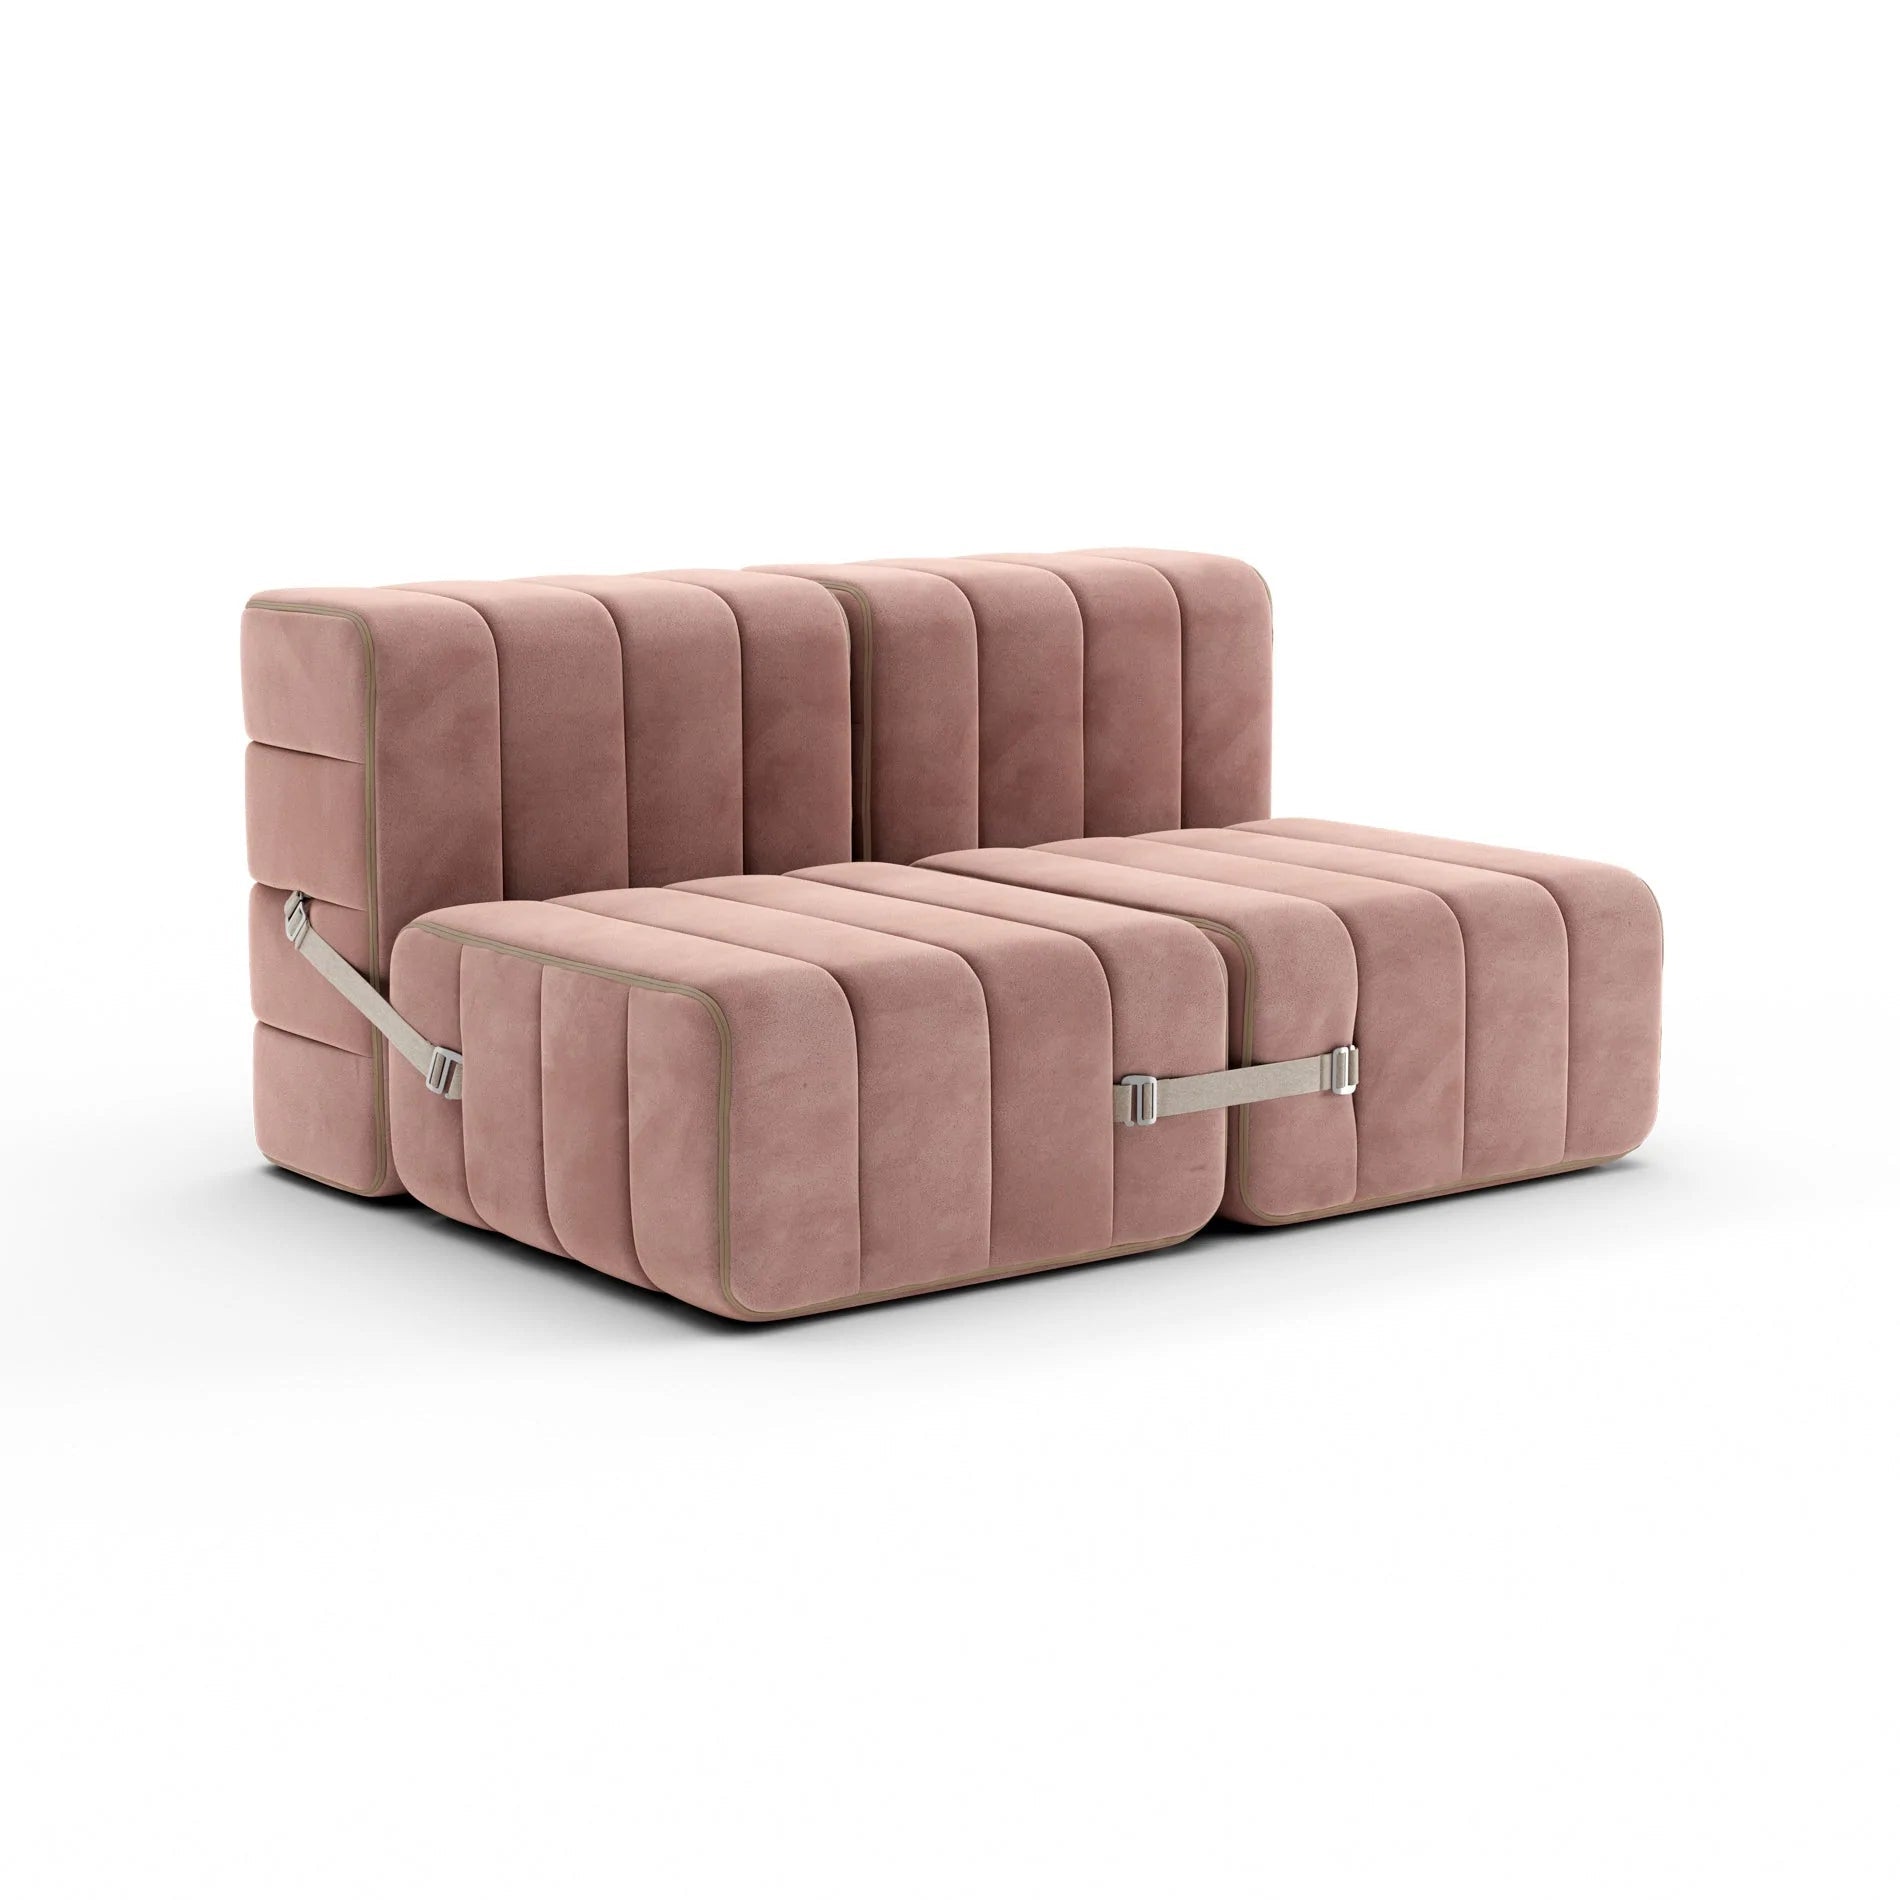 Modular sofa system Curt - Barcelona Lotus